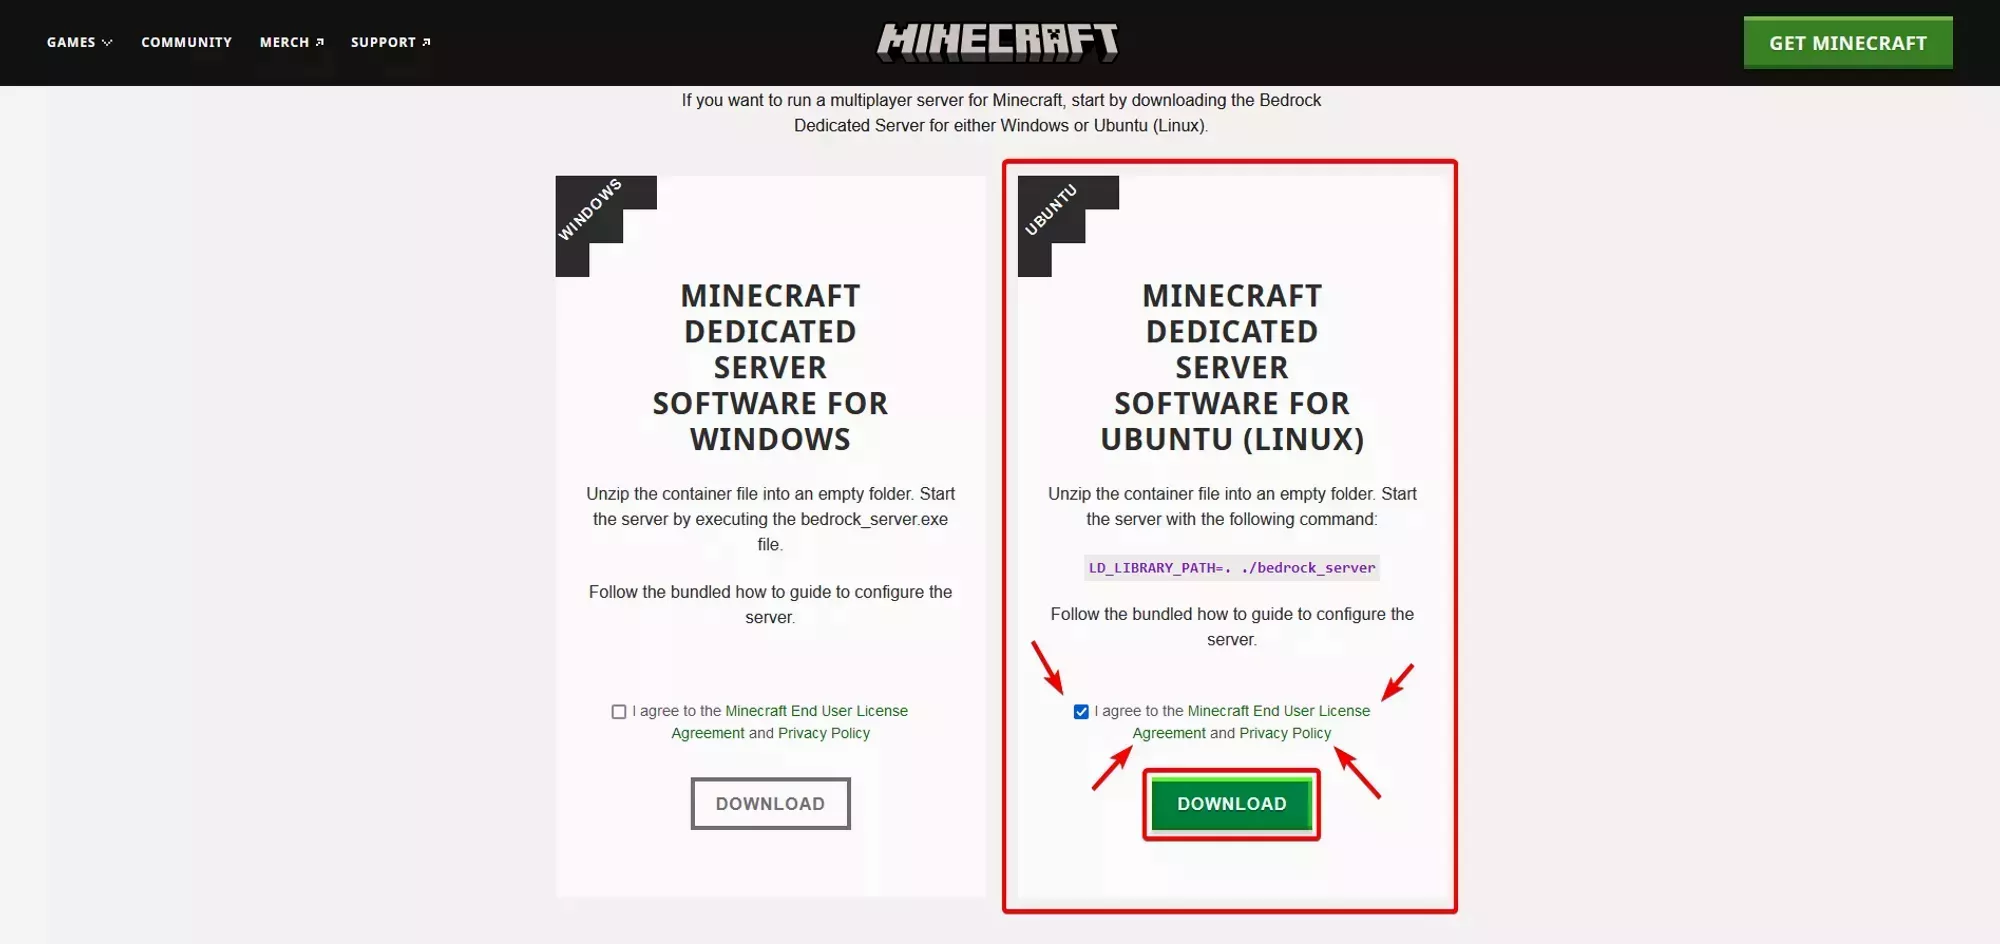 The Minecraft Dedicated Server download pane on the minecraft.net website